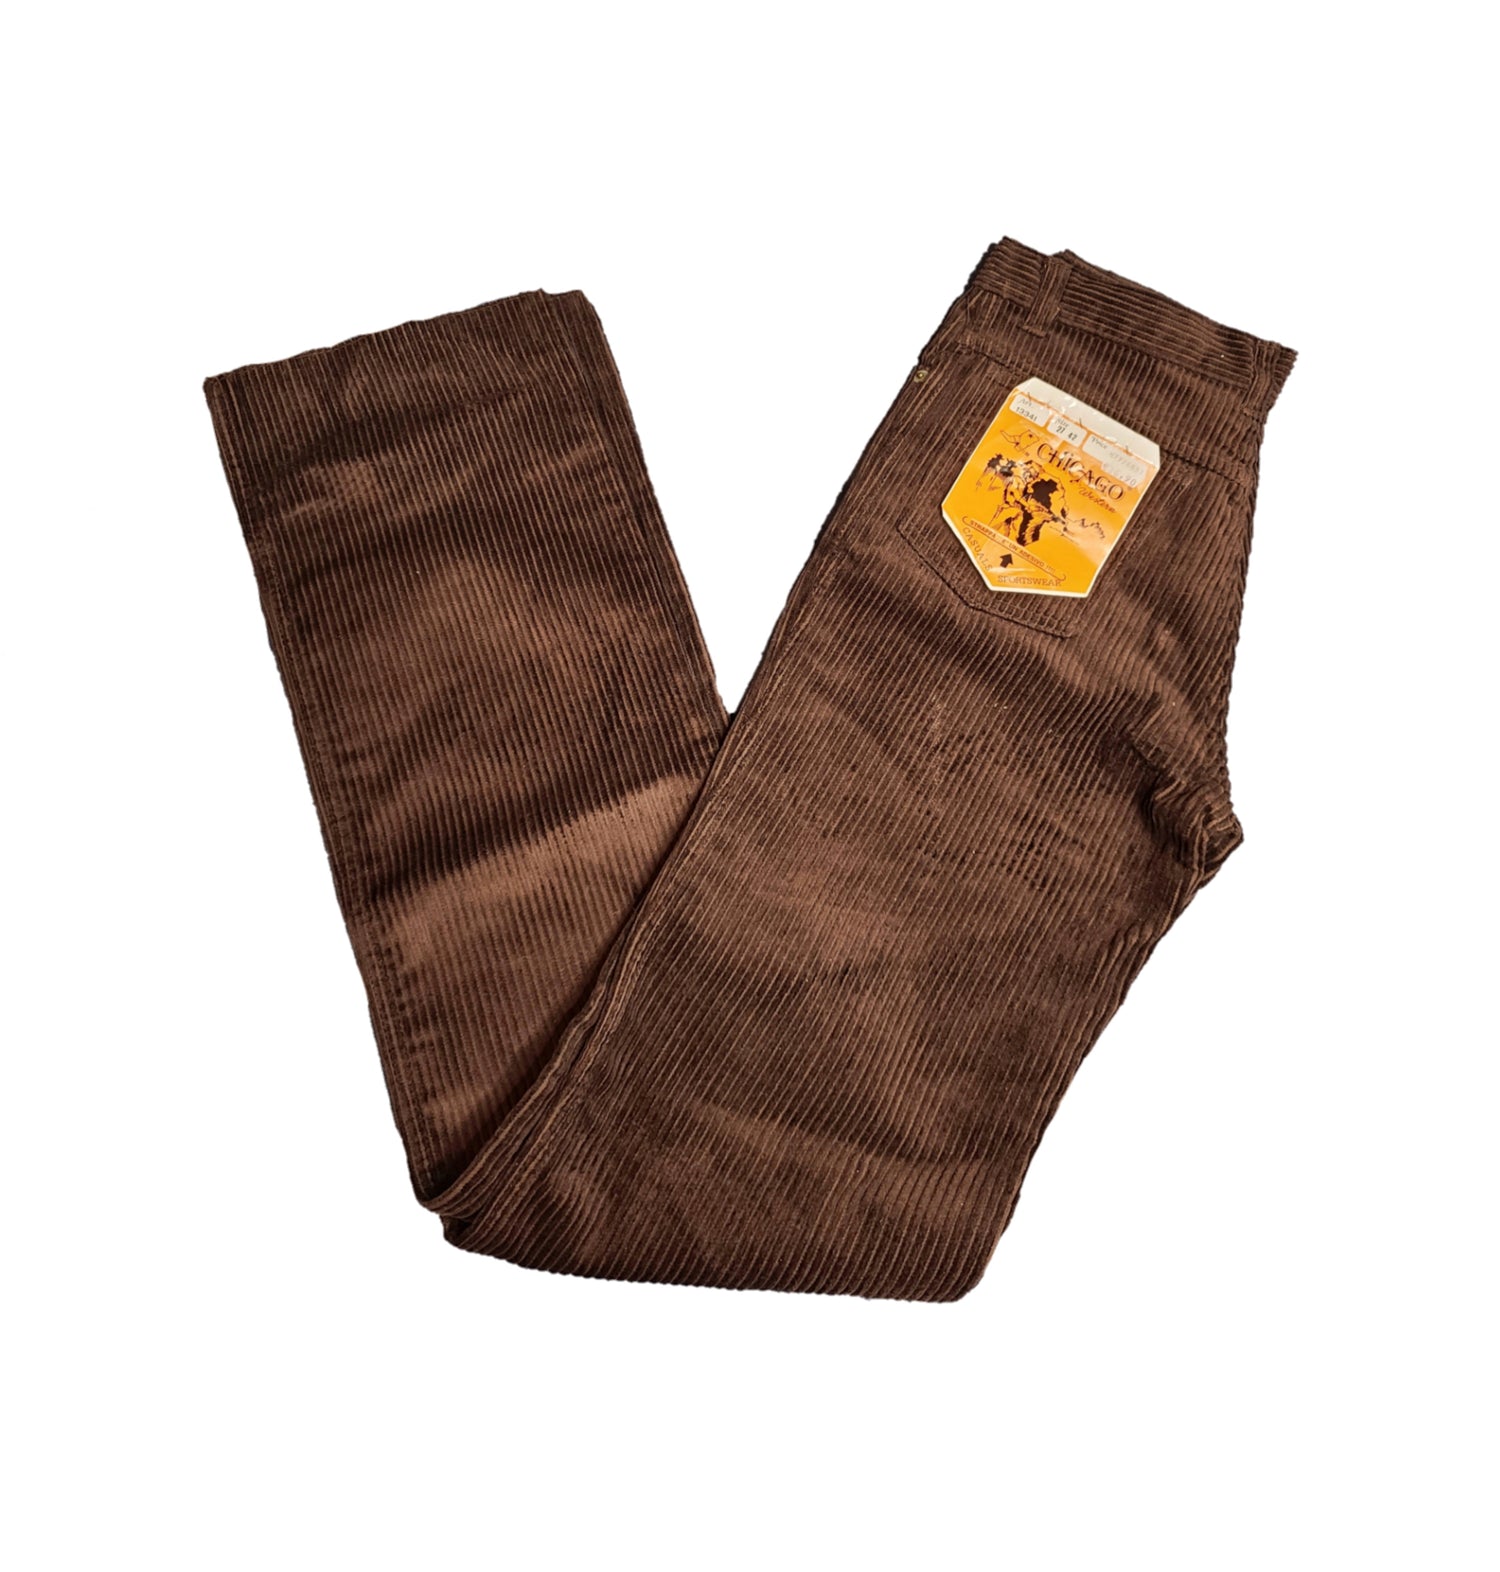 Bohem pantalon vintage velours cotele marron autumn western